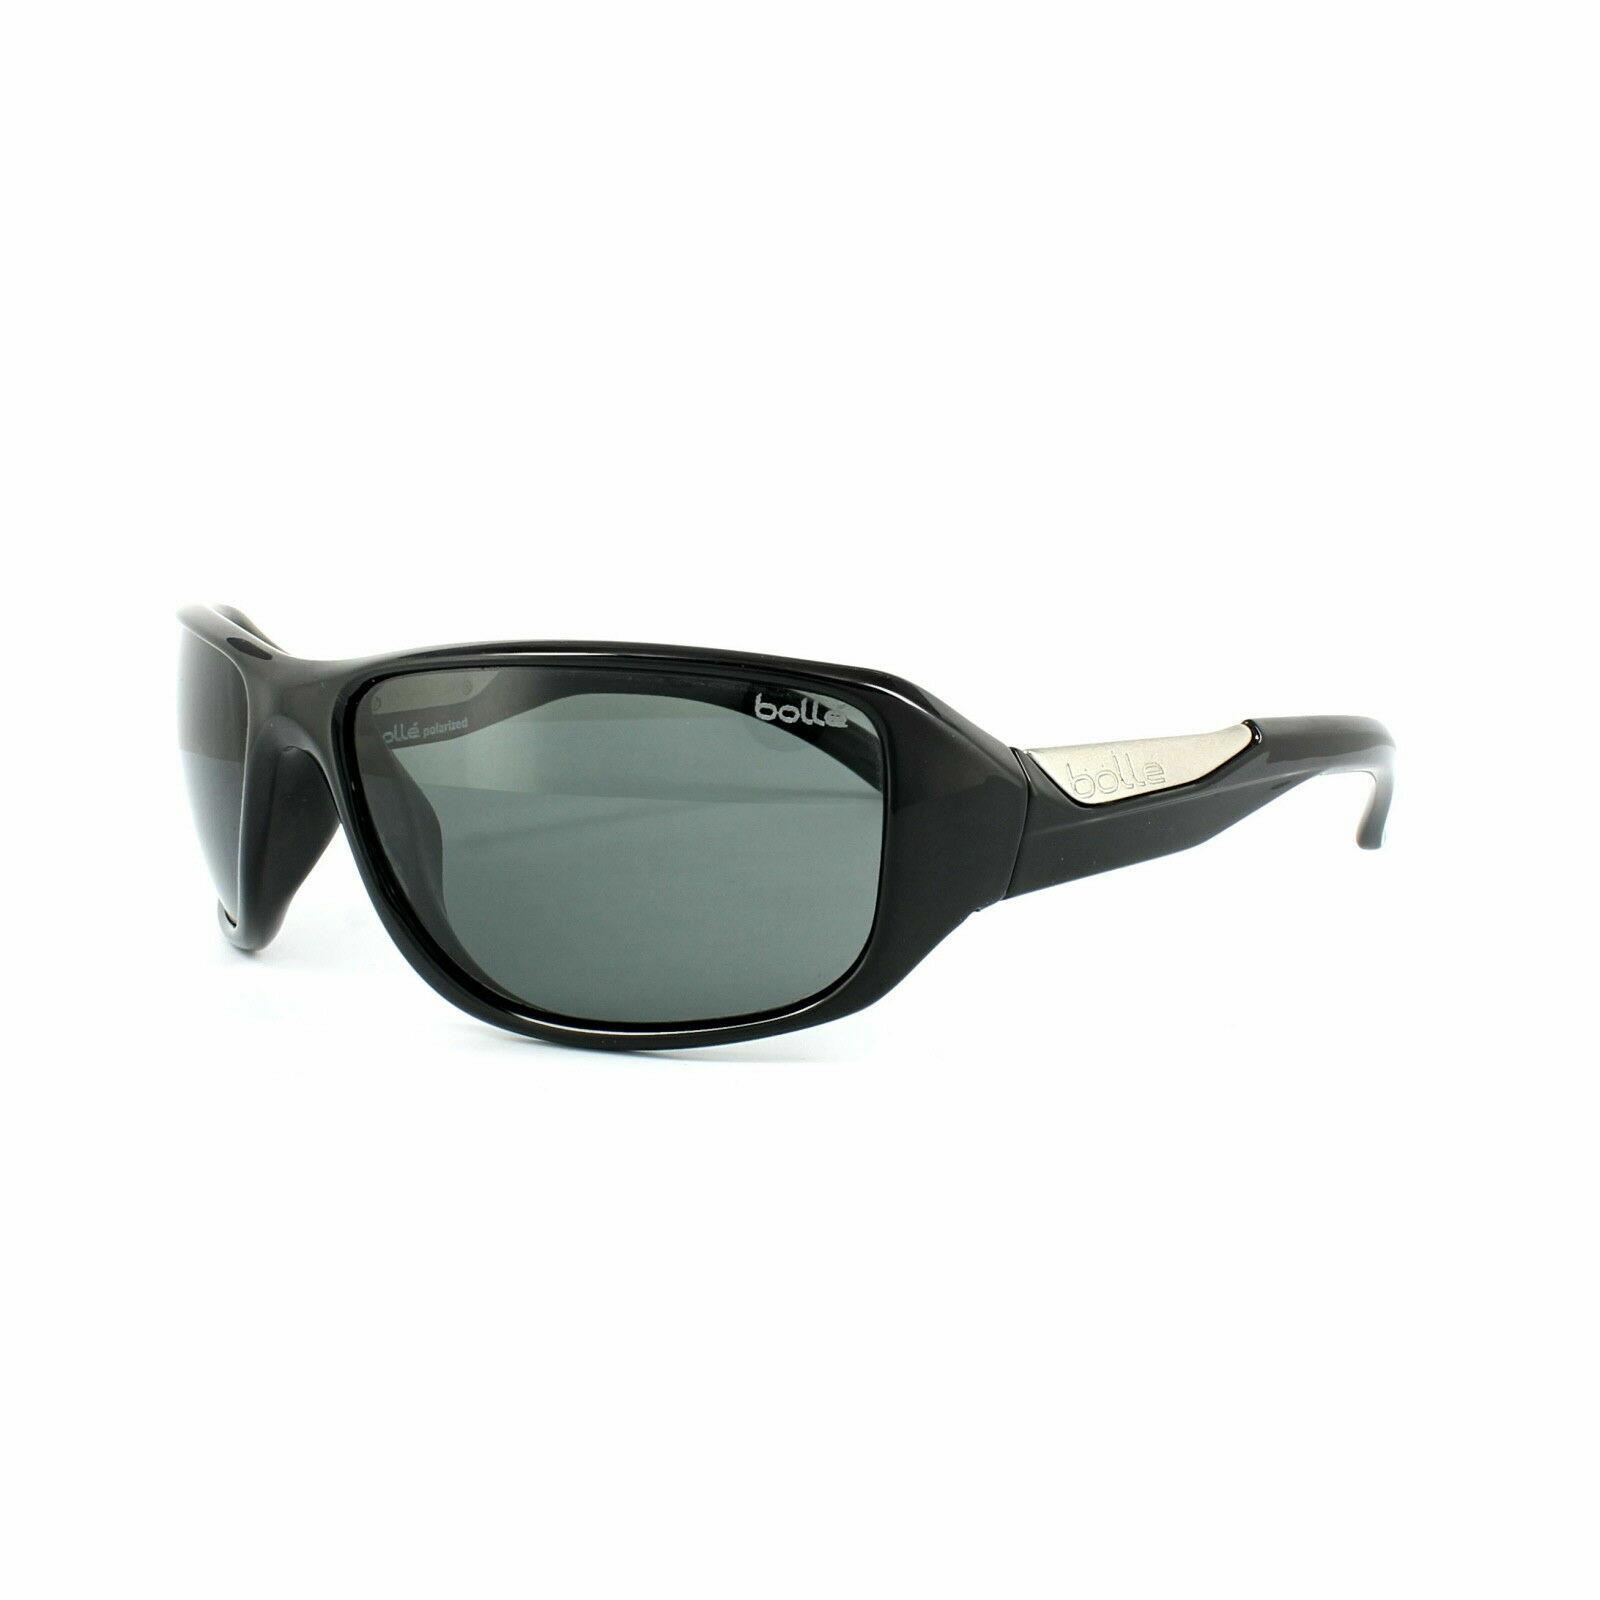 Bolle Sunglasses Smart 11642 Shiny Black TNS Grey Polarized 